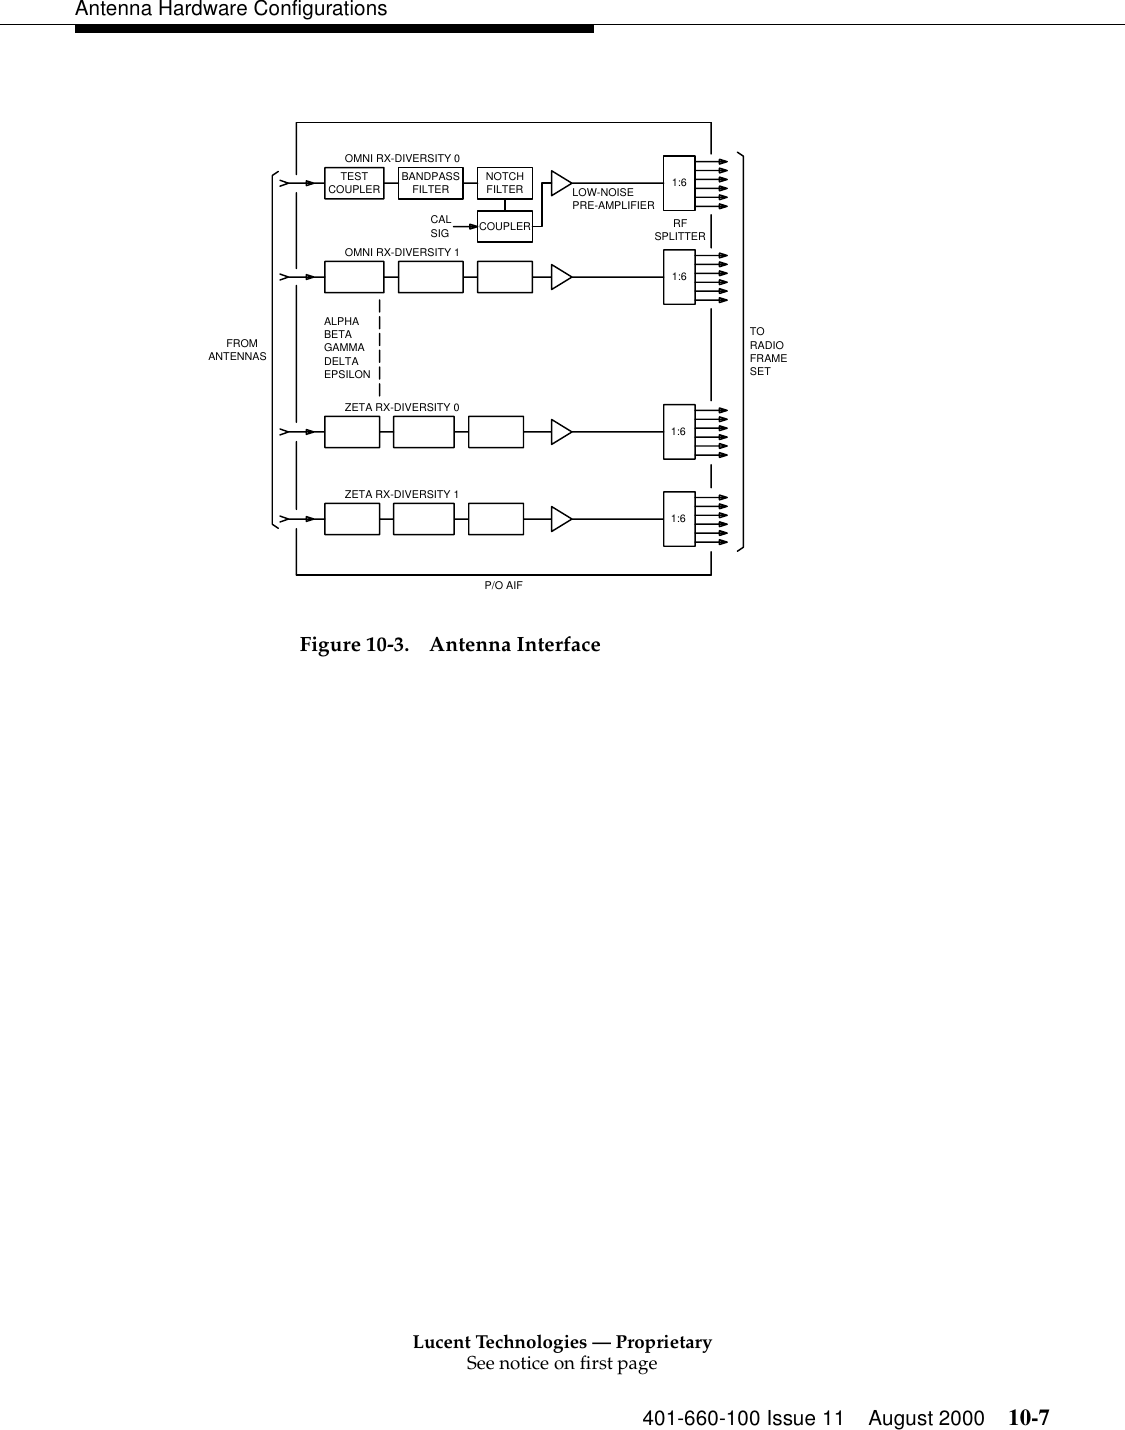 Lucent Technologies — ProprietarySee notice on first page401-660-100 Issue 11 August 2000 10-7Antenna Hardware ConfigurationsFigure 10-3. Antenna InterfaceP/O AIFZETA RX-DIVERSITY 11:6ANTENNAS   FROMEPSILONDELTAGAMMABETAALPHACOUPLERTESTFRAMESETRADIOTOBANDPASS1:61:61:6RFSIGCAL COUPLERZETA RX-DIVERSITY 0SPLITTERPRE-AMPLIFIERLOW-NOISEOMNI RX-DIVERSITY 1OMNI RX-DIVERSITY 0FILTERNOTCHFILTER